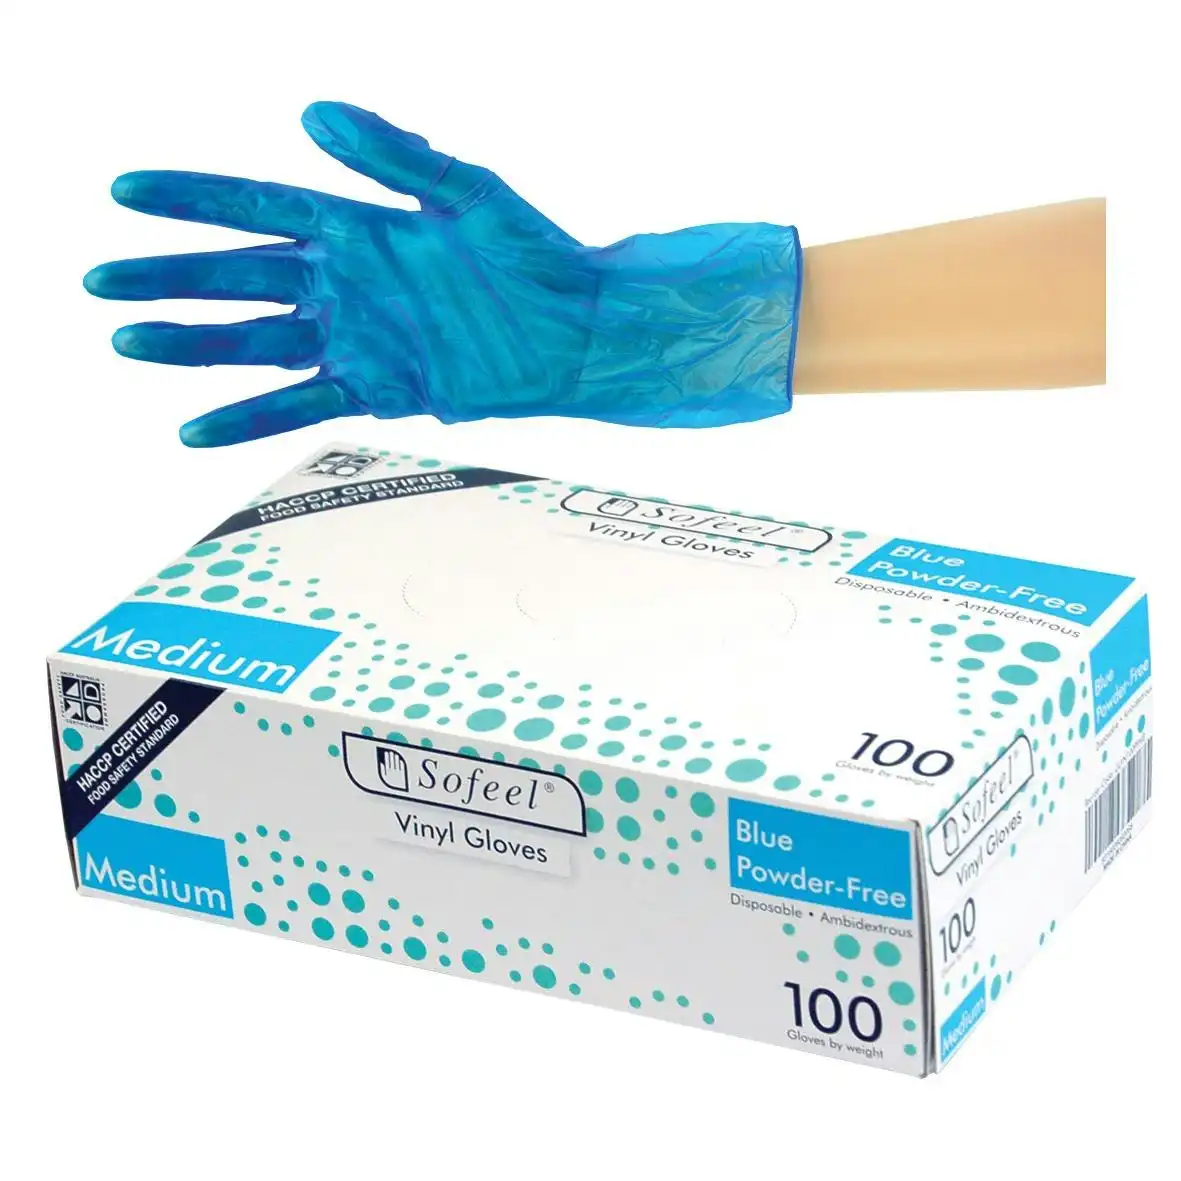 Sofeel Vinyl Powder Free Gloves 4.5g Medium Blue HACCP Grade 100 Box x1000